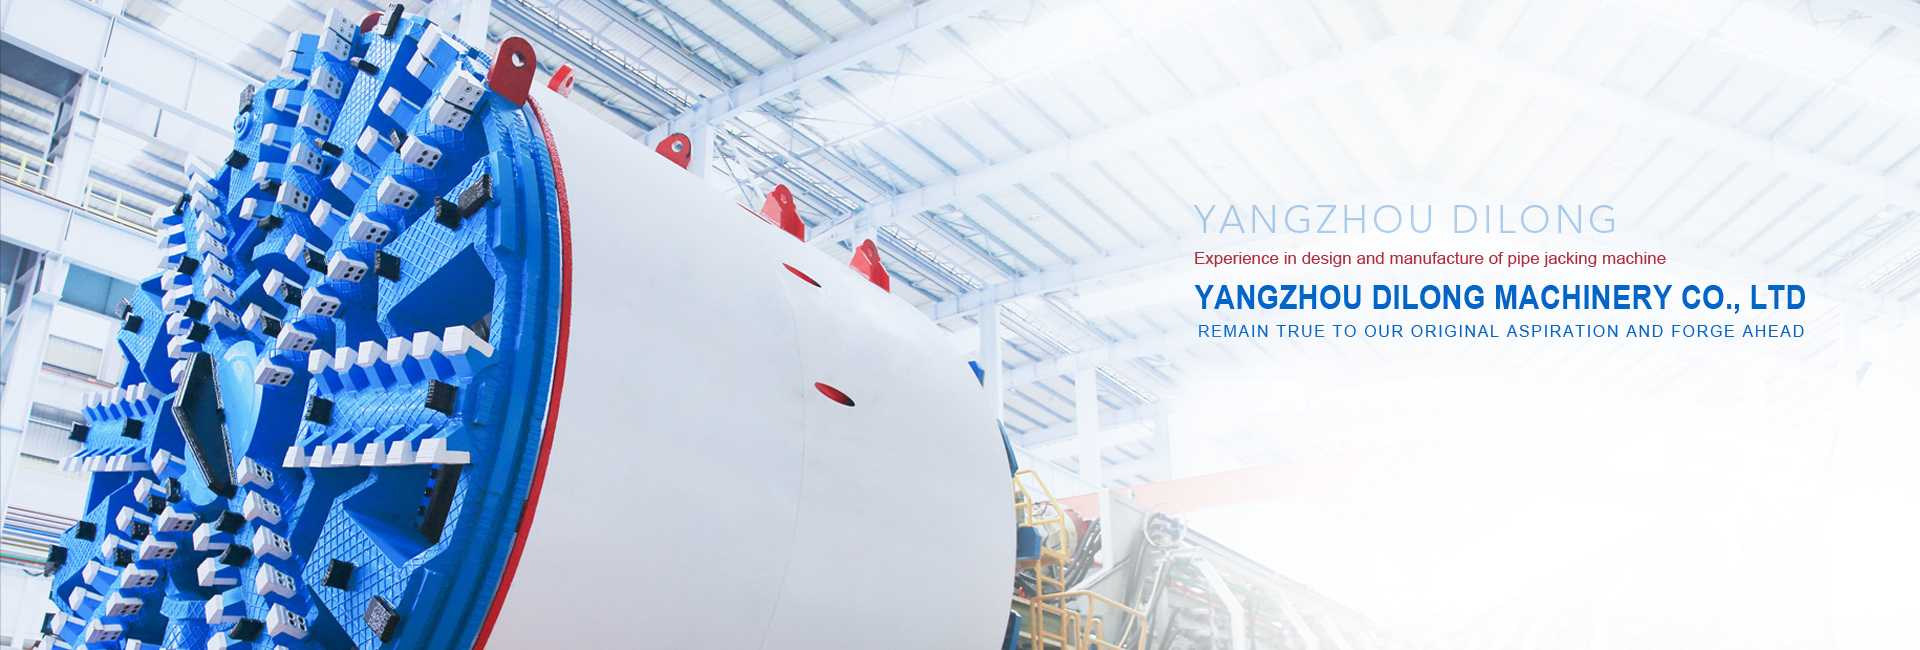 Yangzhou Dilong Machinery Co., Ltd